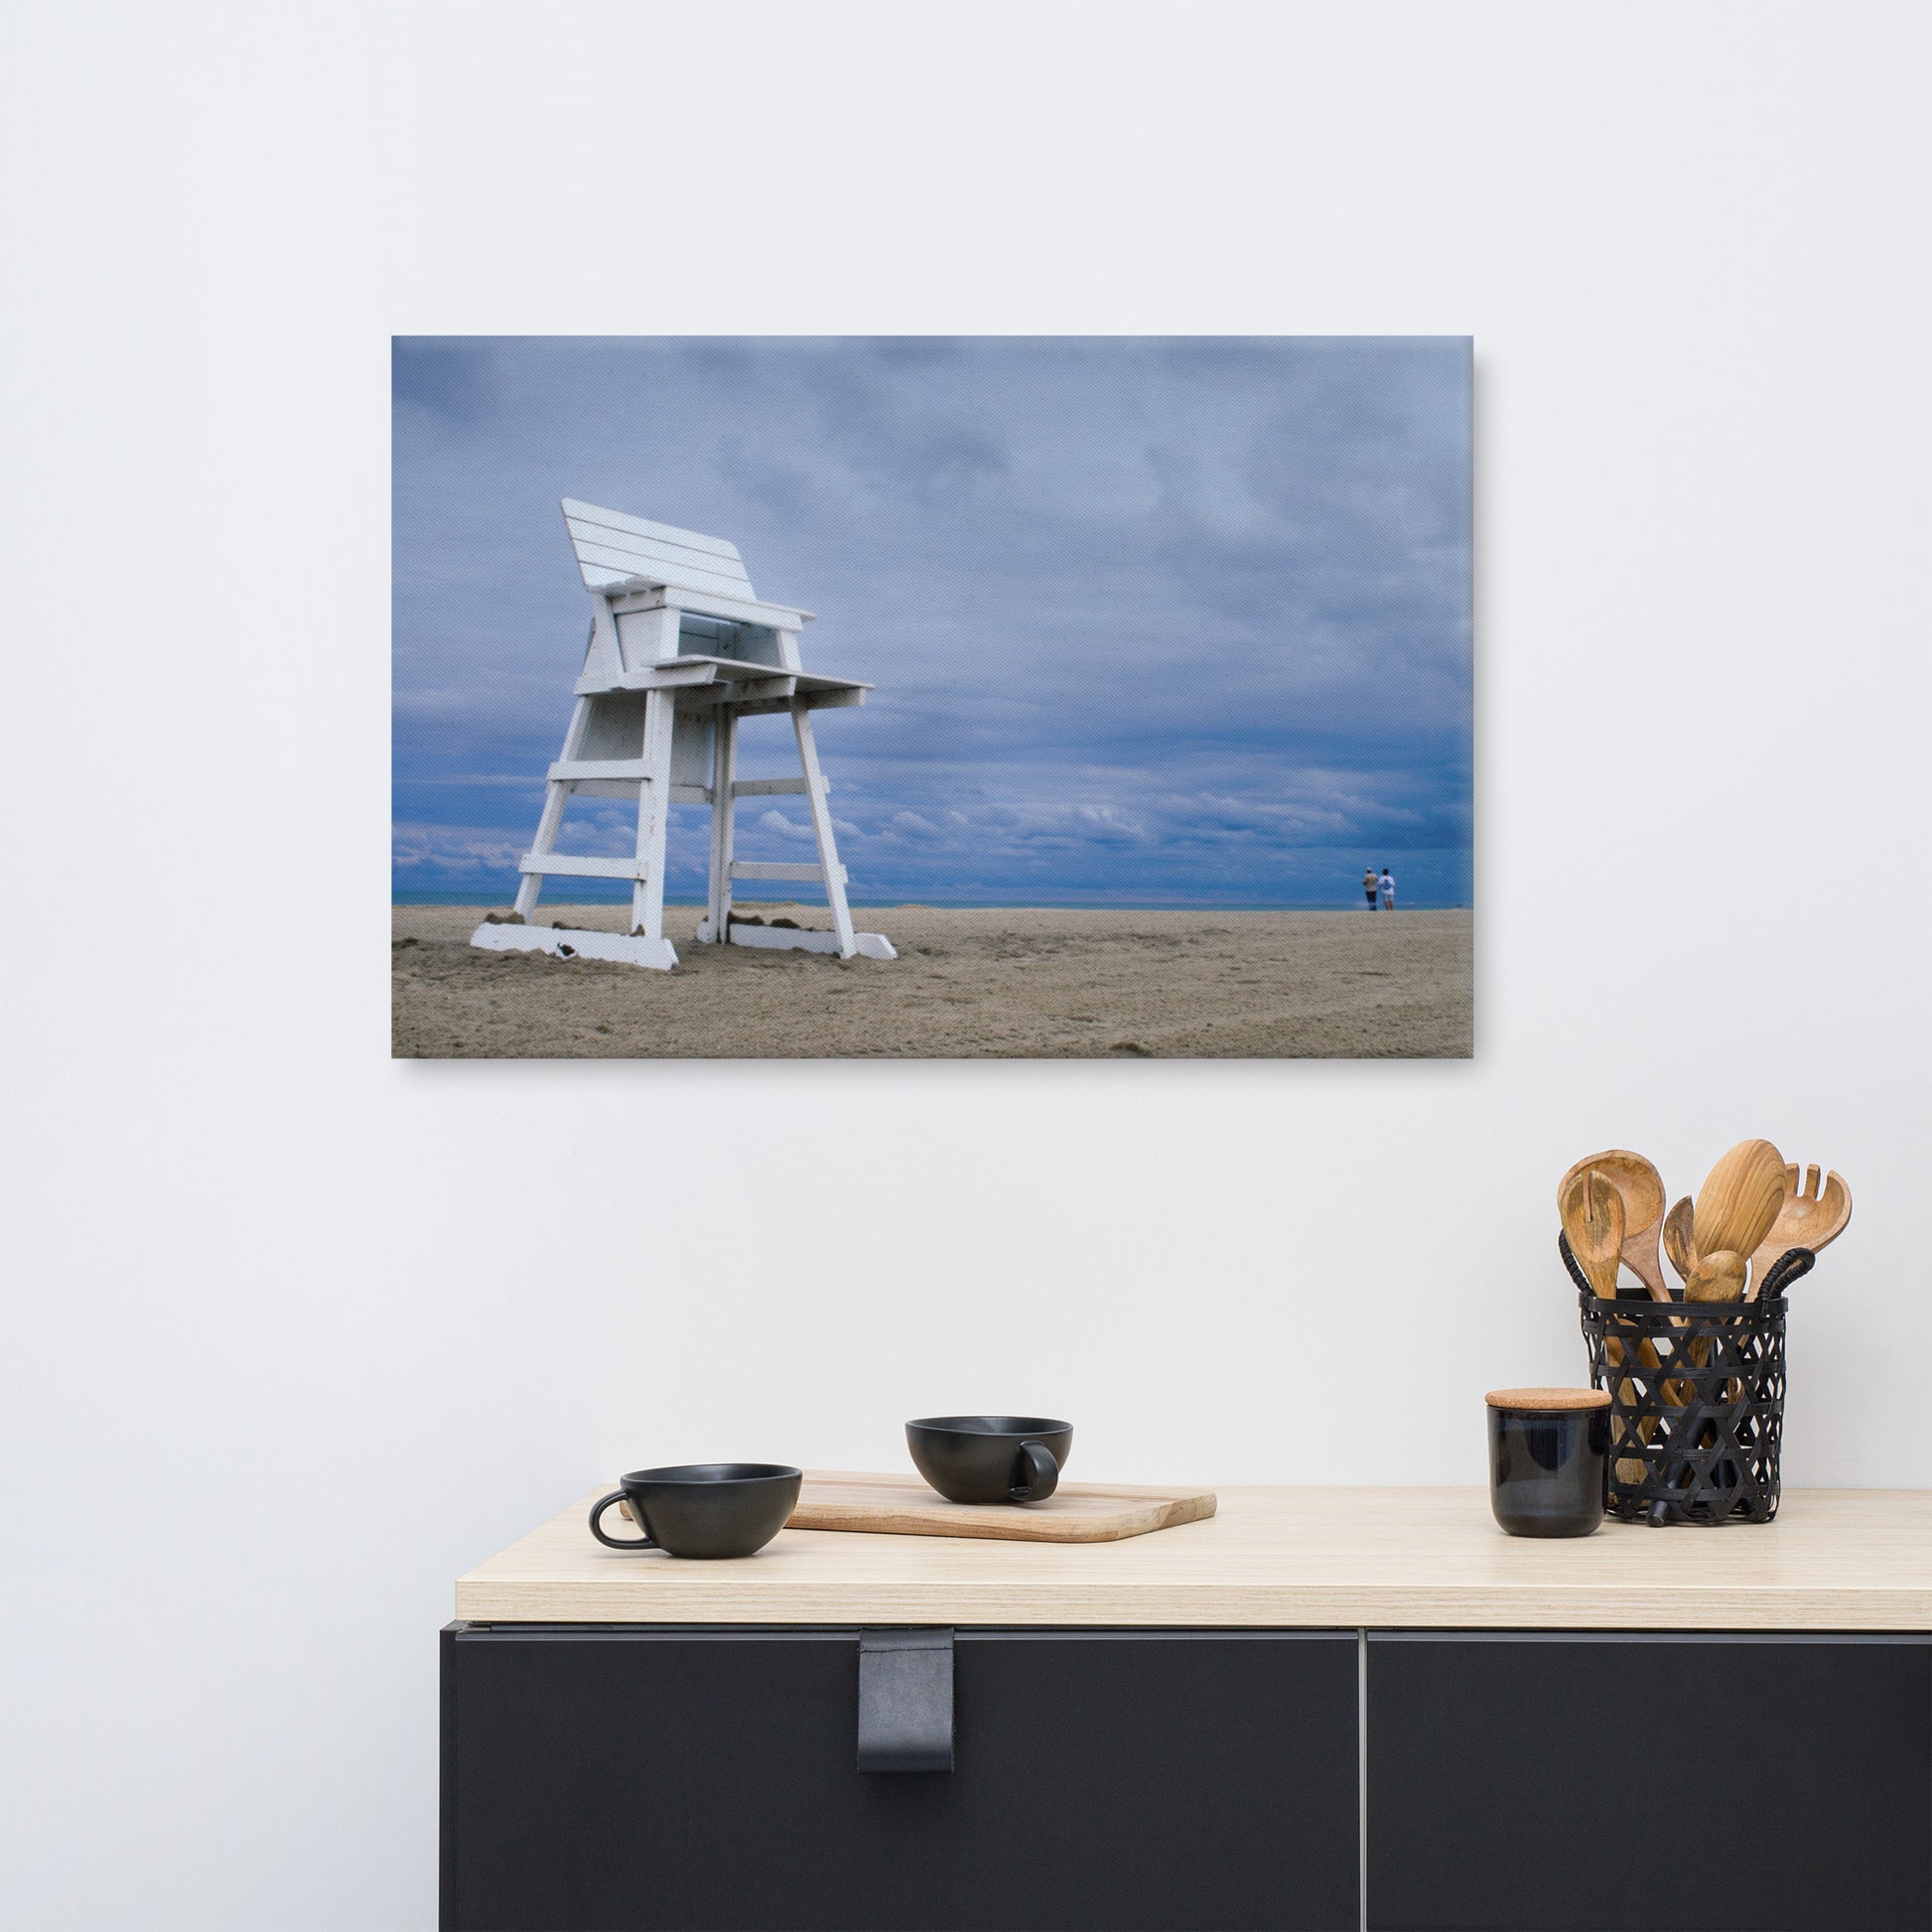 Formal Dining Room Wall Art: Approaching Storm - Coastal / Beach / Seascape / Nature / Landscape Photo Canvas Wall Art Print - Artwork